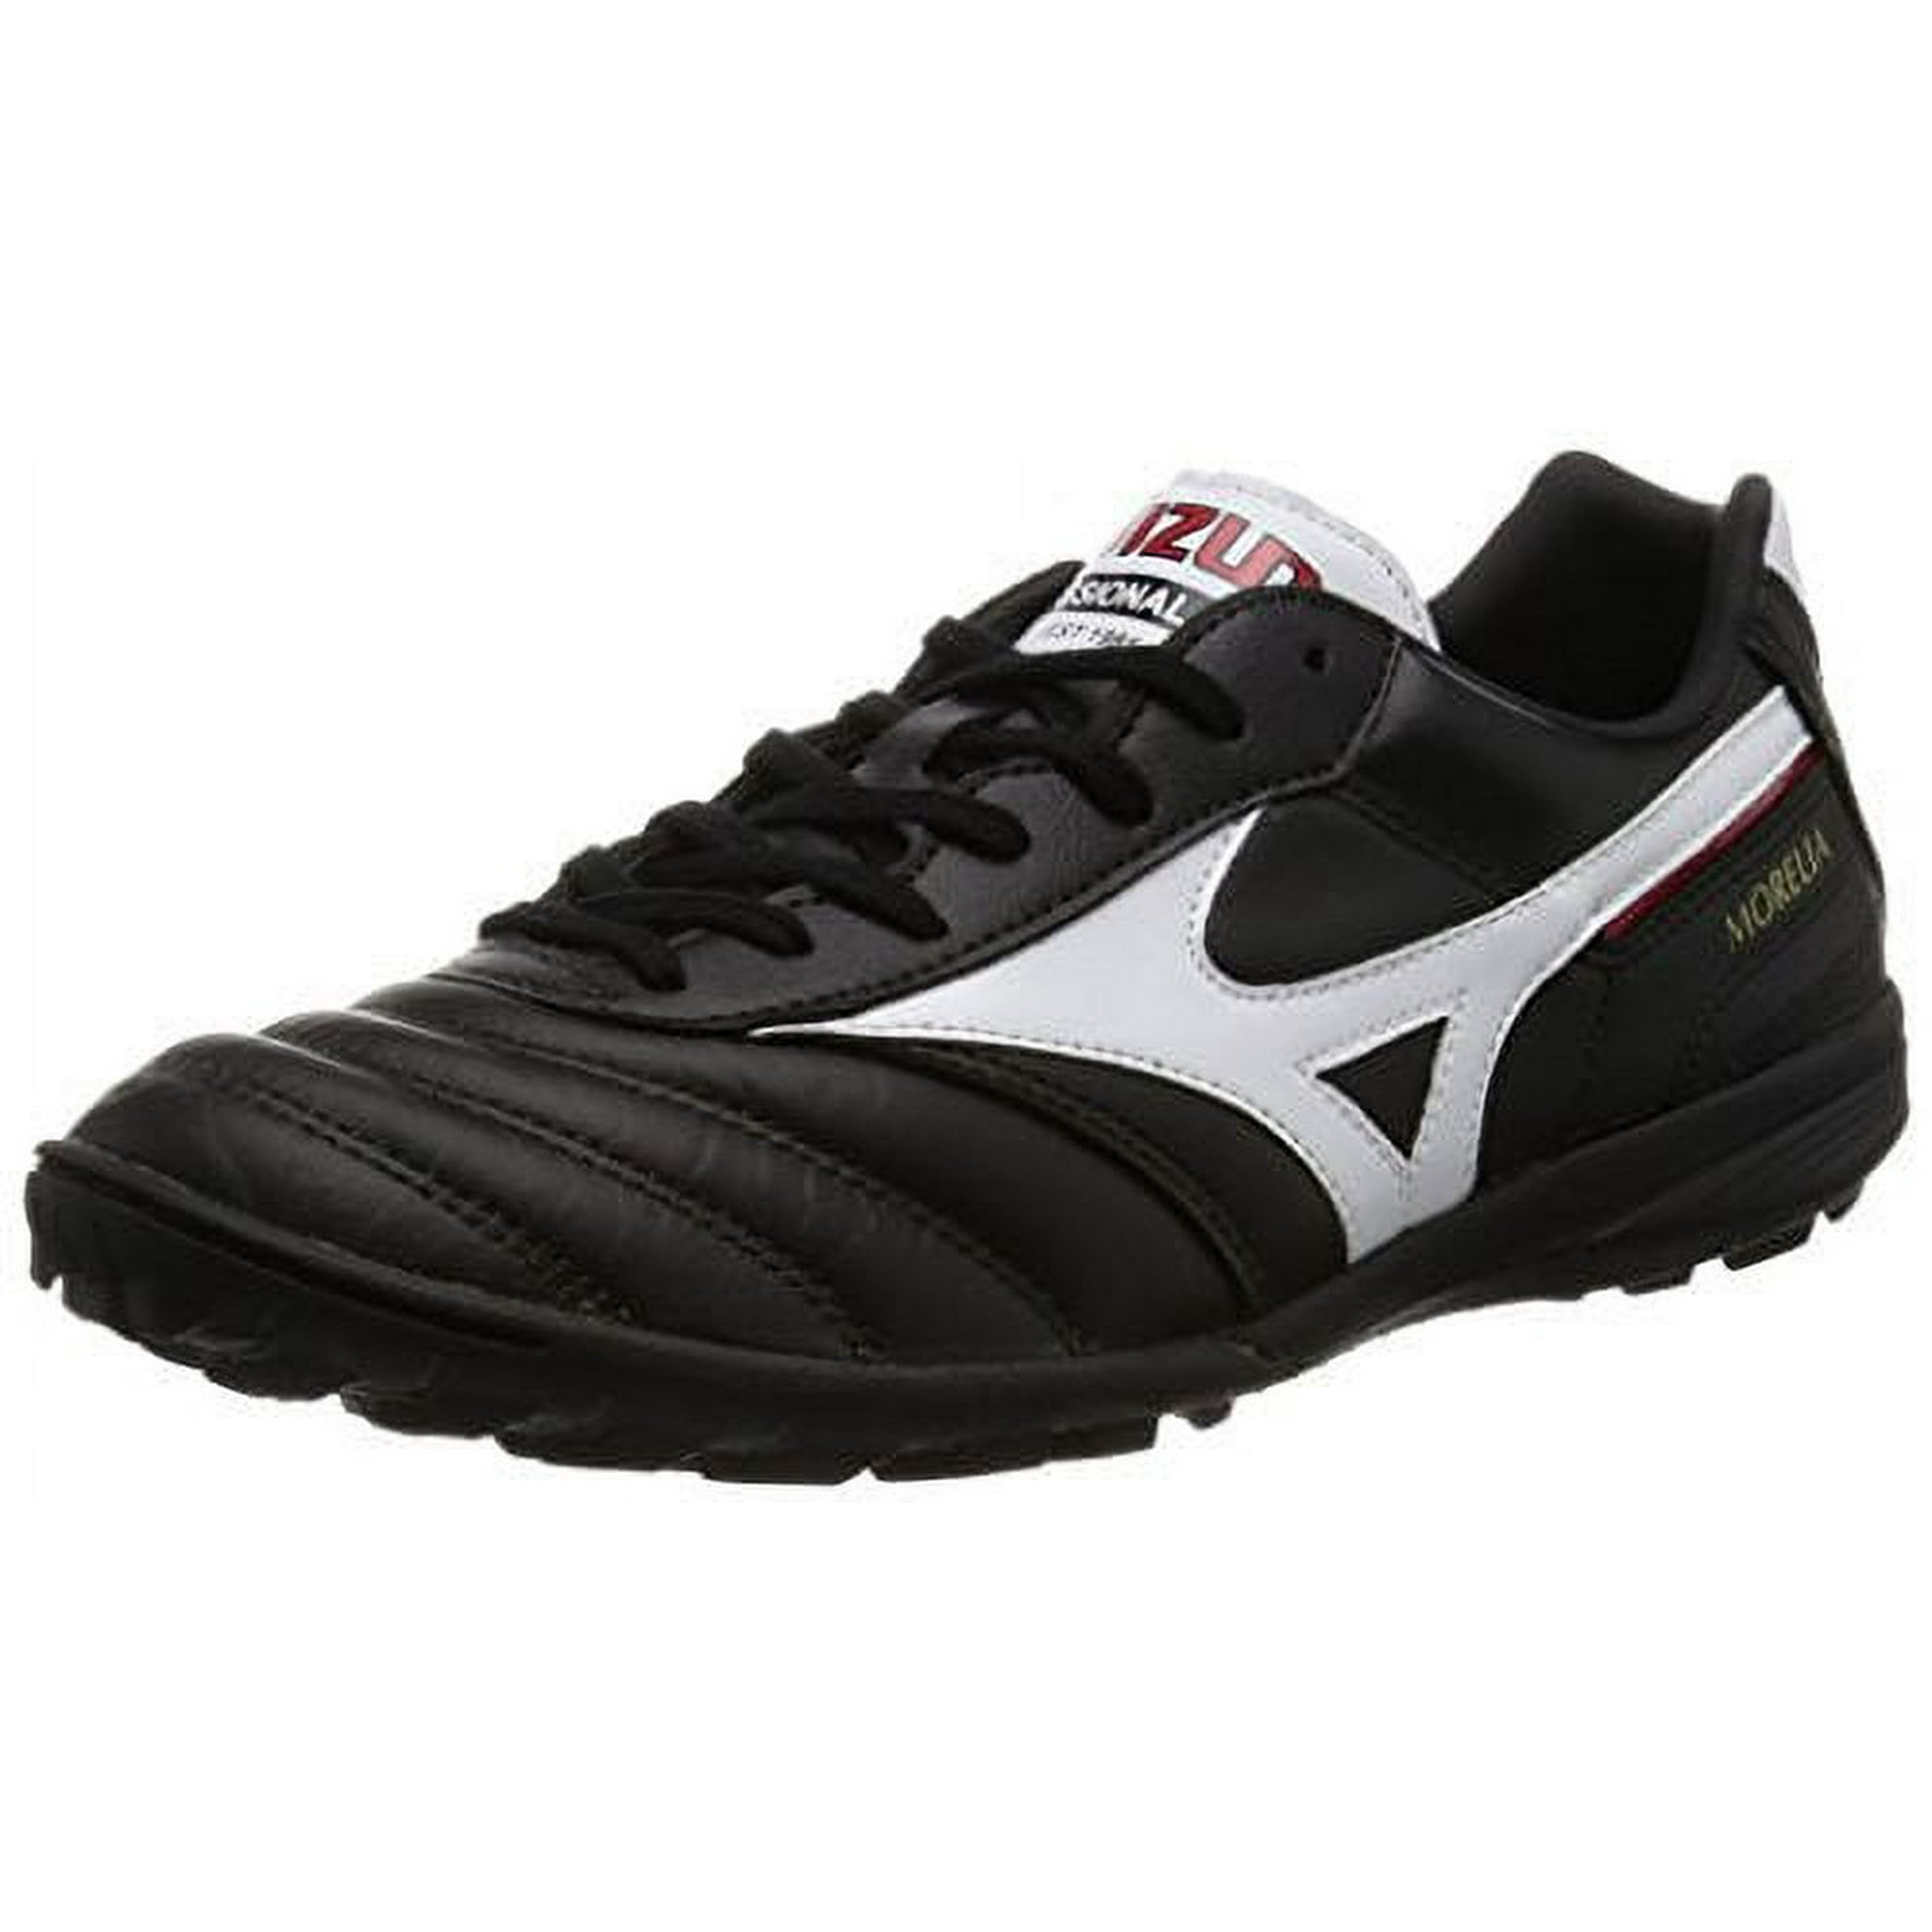 Mizuno] Futsal Shoes Morelia TF Black x White 27.0 cm 2E - Walmart.com